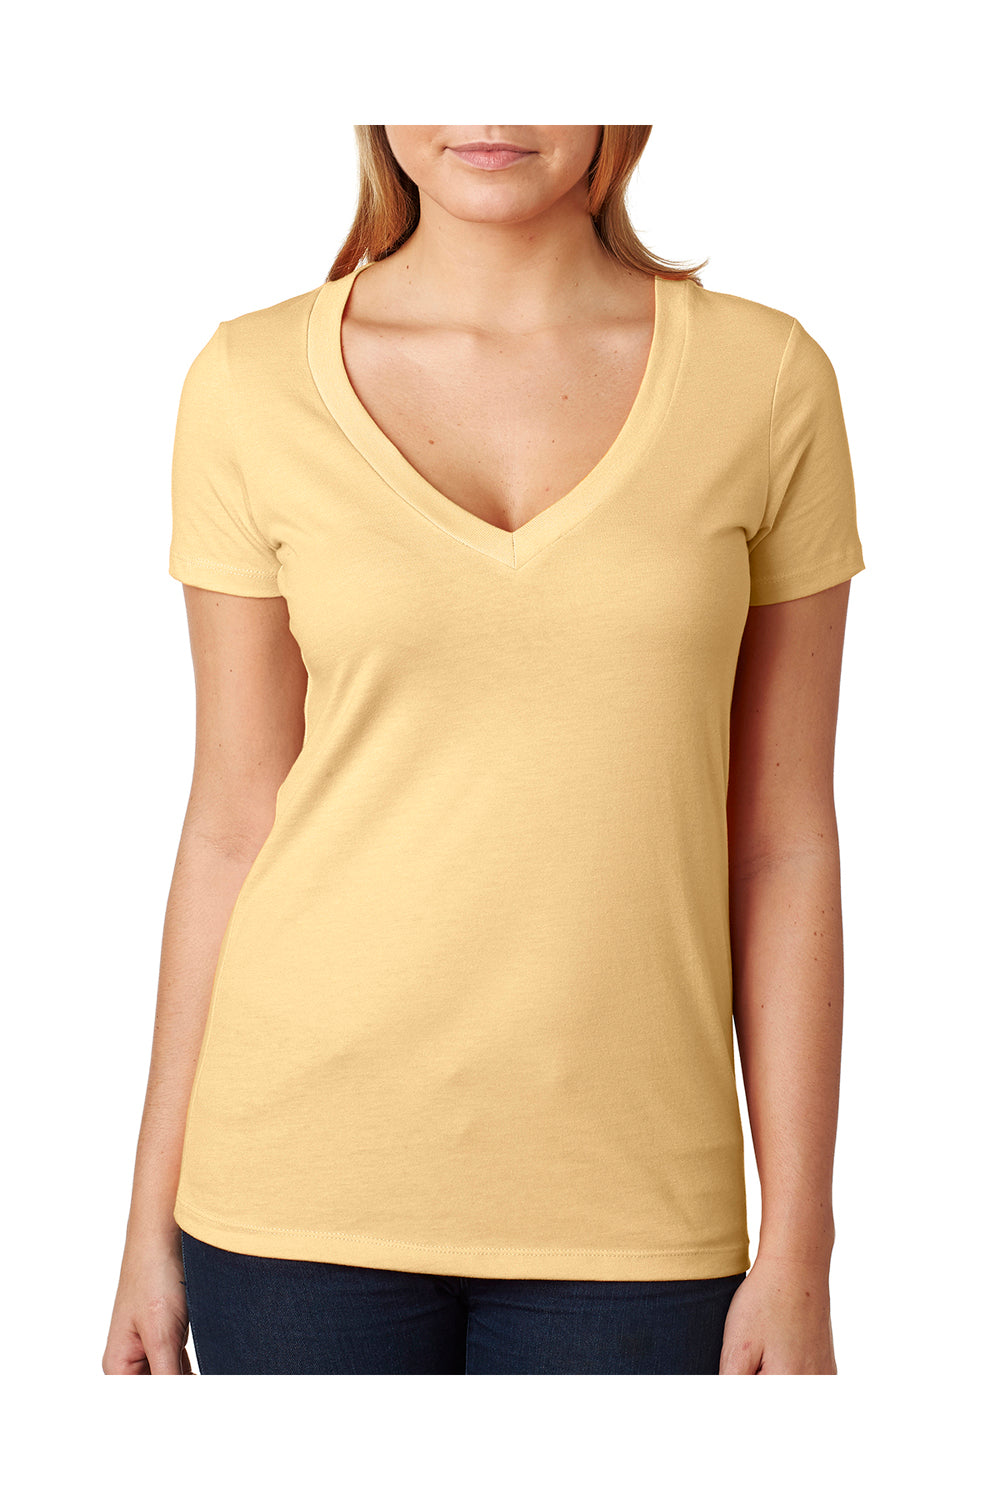 Next Level 6640 Womens CVC Jersey Short Sleeve V-Neck T-Shirt Yellow Front